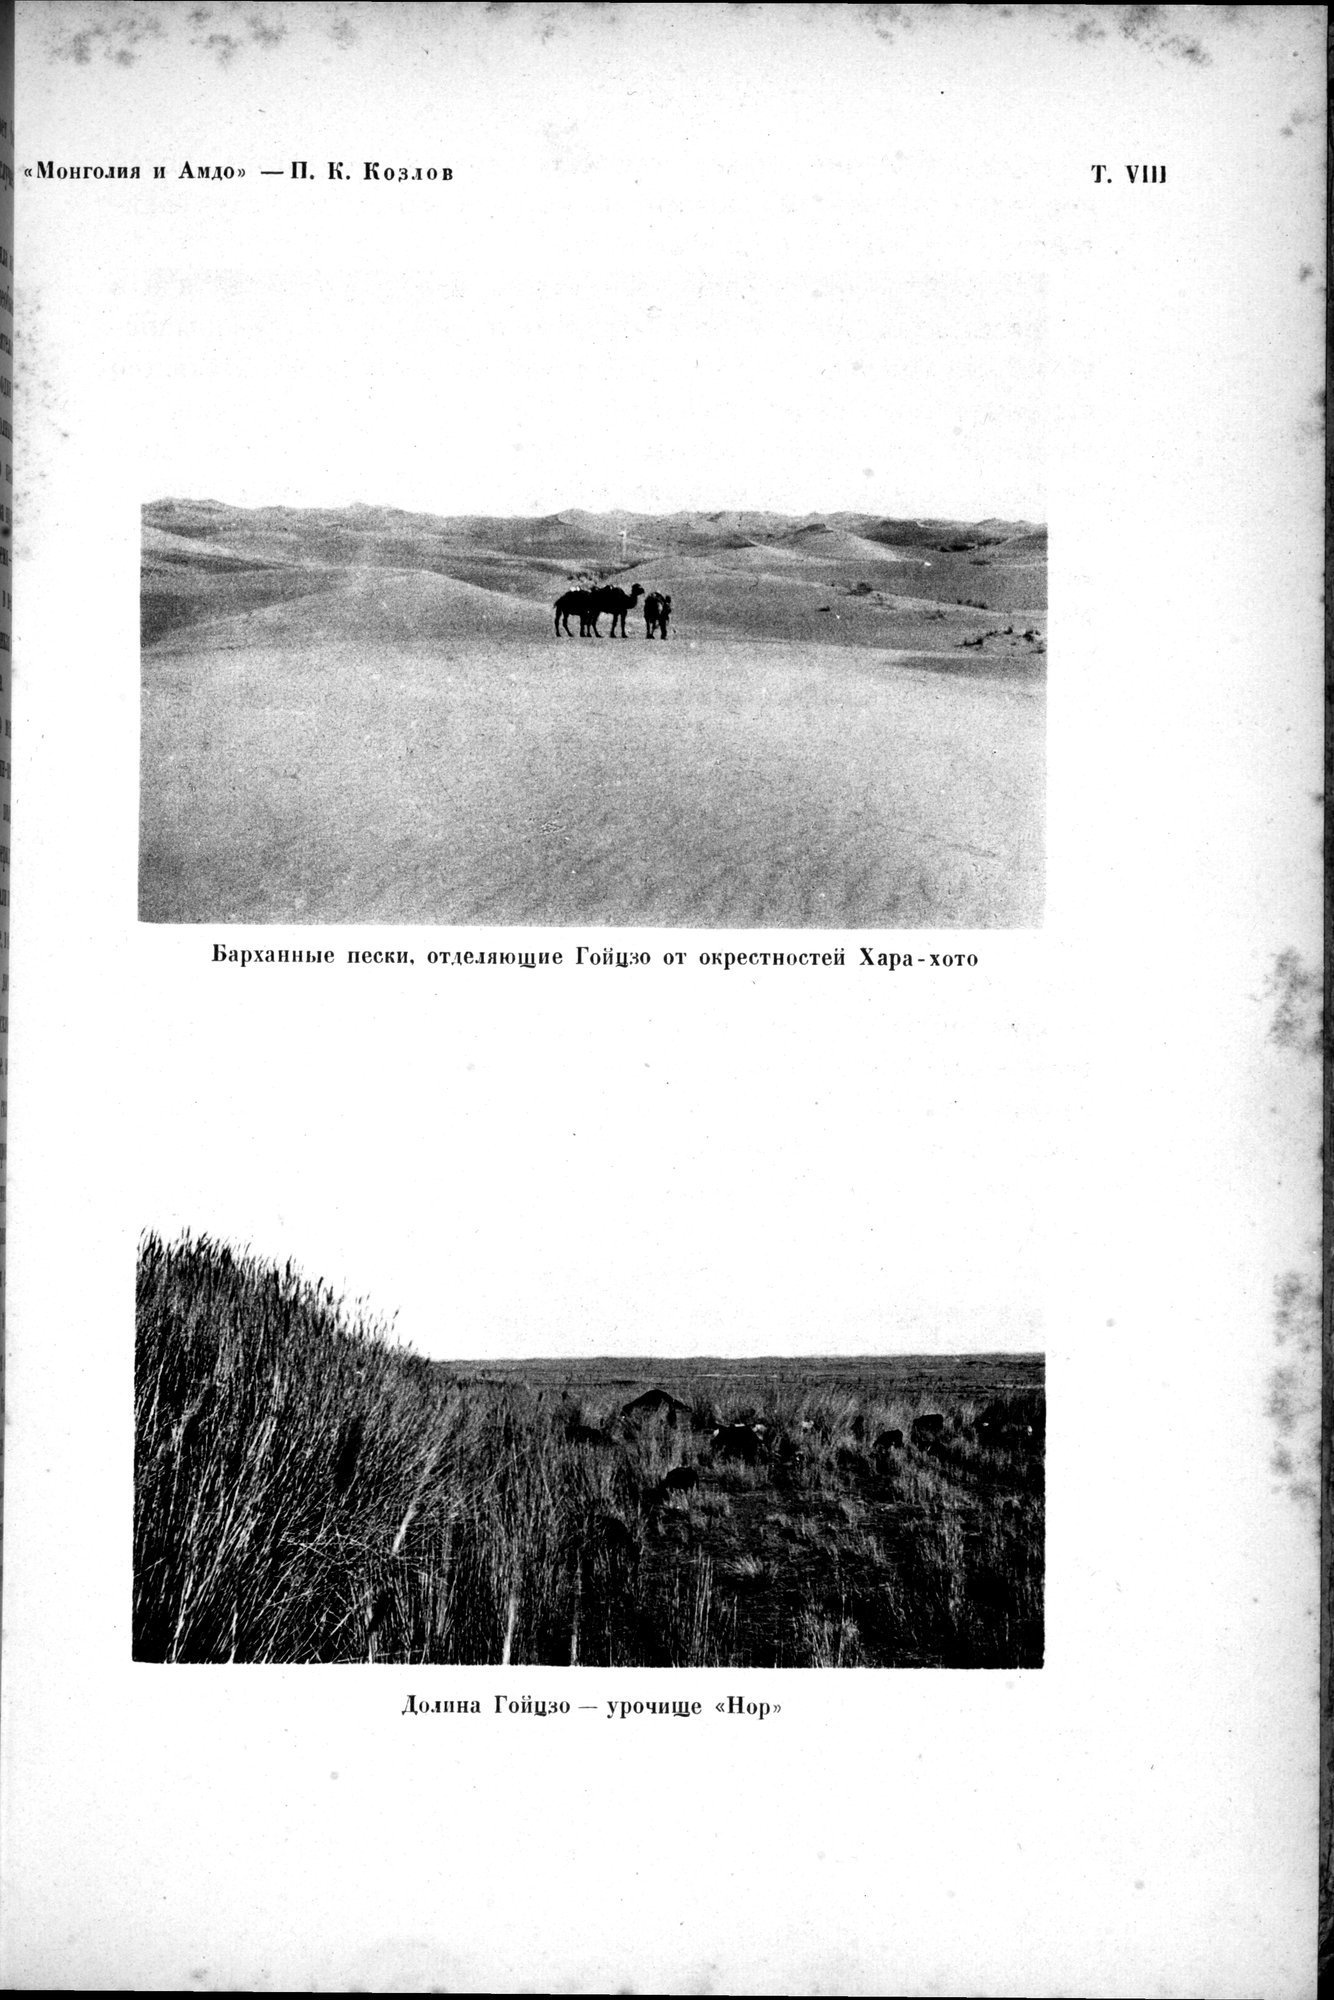 Mongoliya i Amdo i mertby gorod Khara-Khoto : vol.1 / Page 155 (Grayscale High Resolution Image)